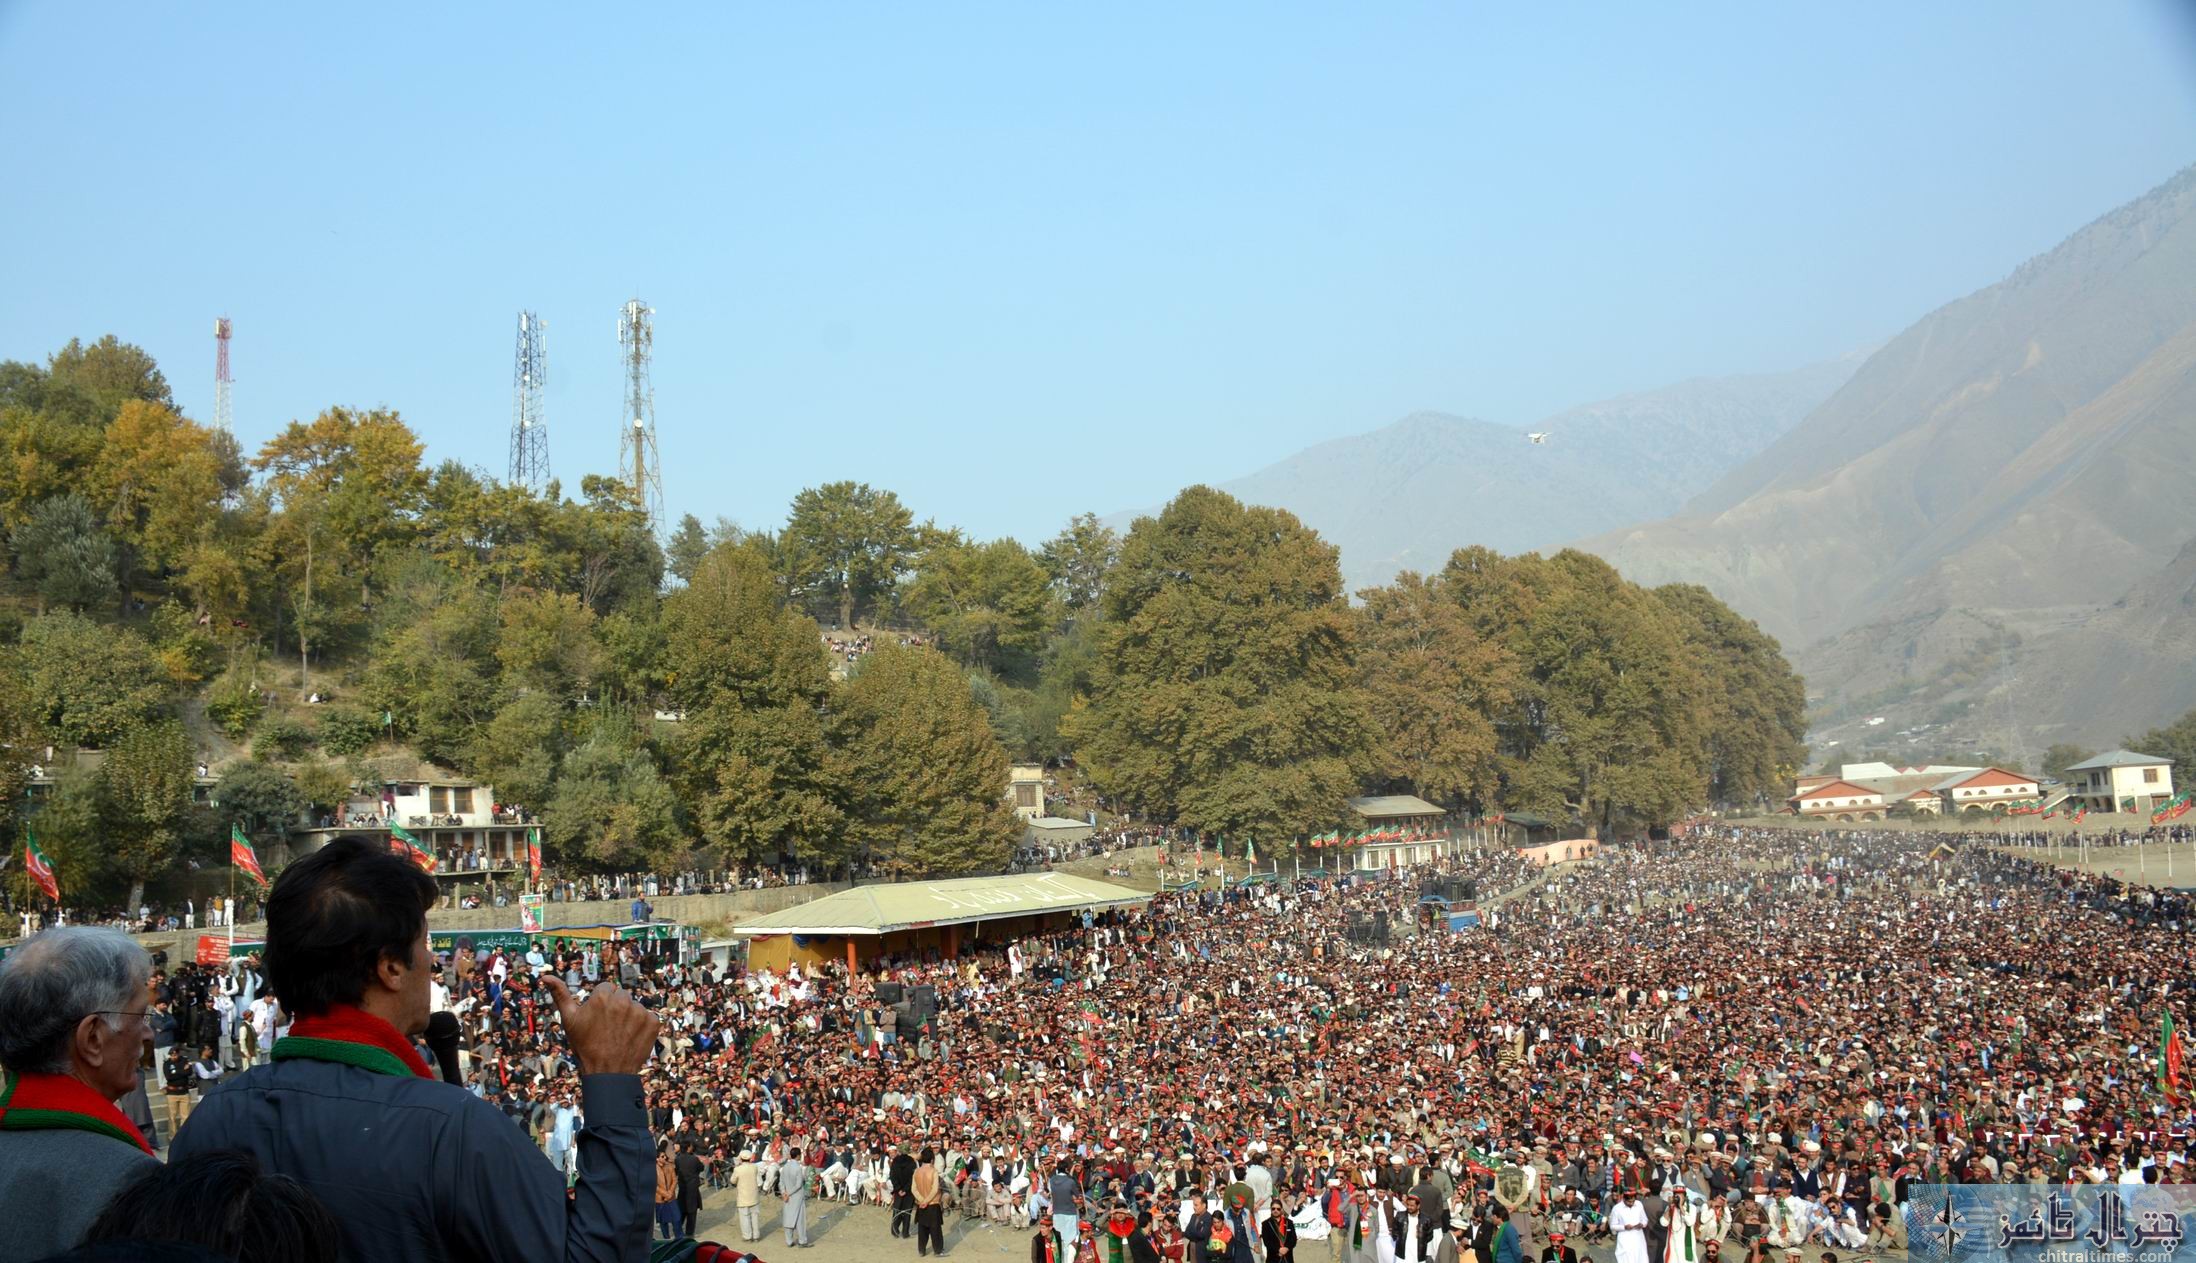 chitral PTI Chairman Imran Khan addresing a pubic gathering in Chitral Pologround pic by Saif ur Rehman Aziz111